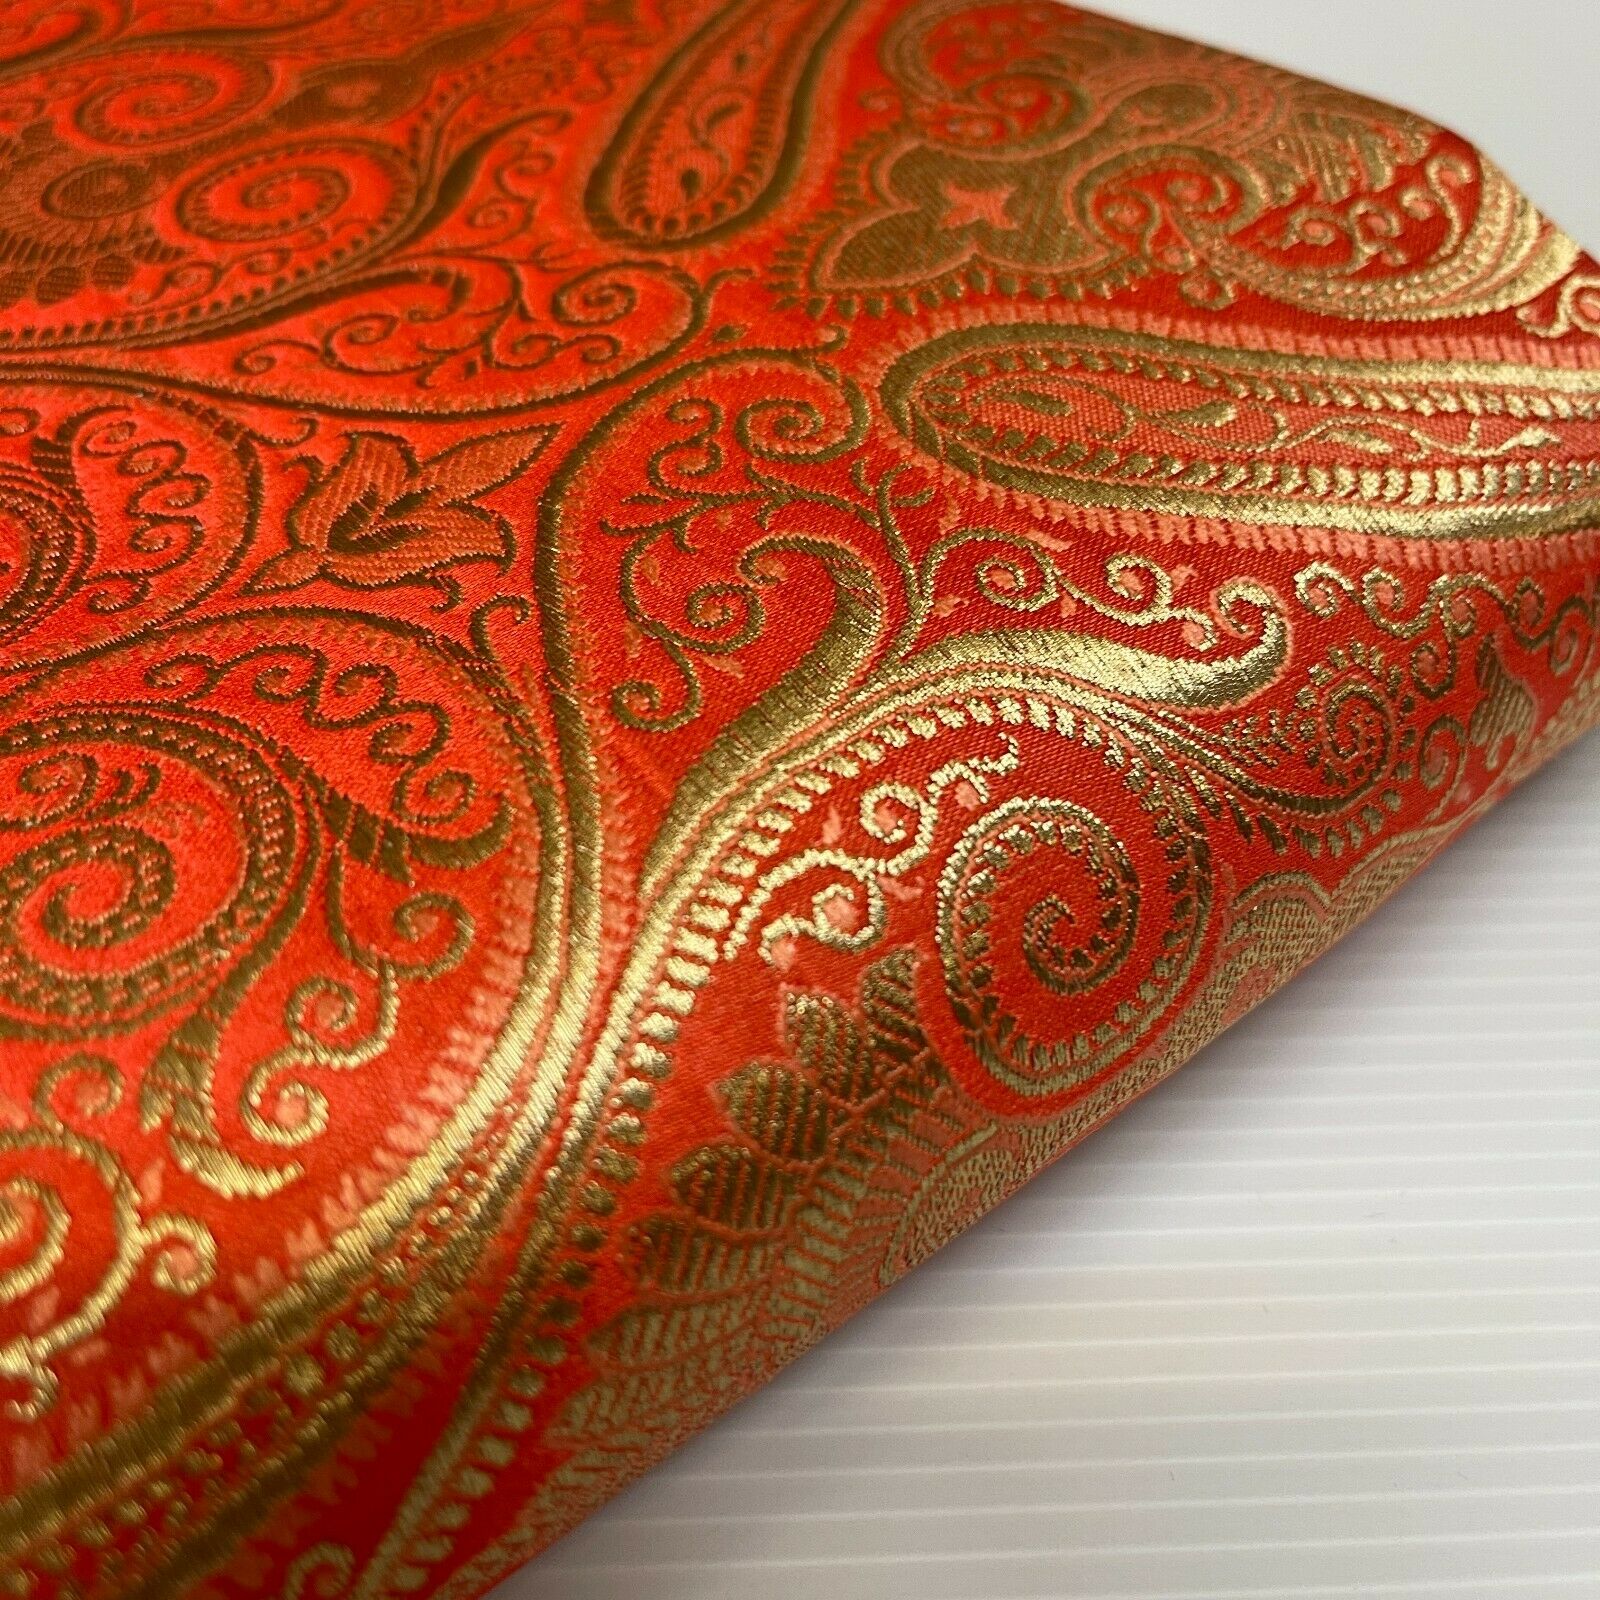 Ornamental paisley gold metallic print Indian banarsi Brocade fabric M1537 Mtex